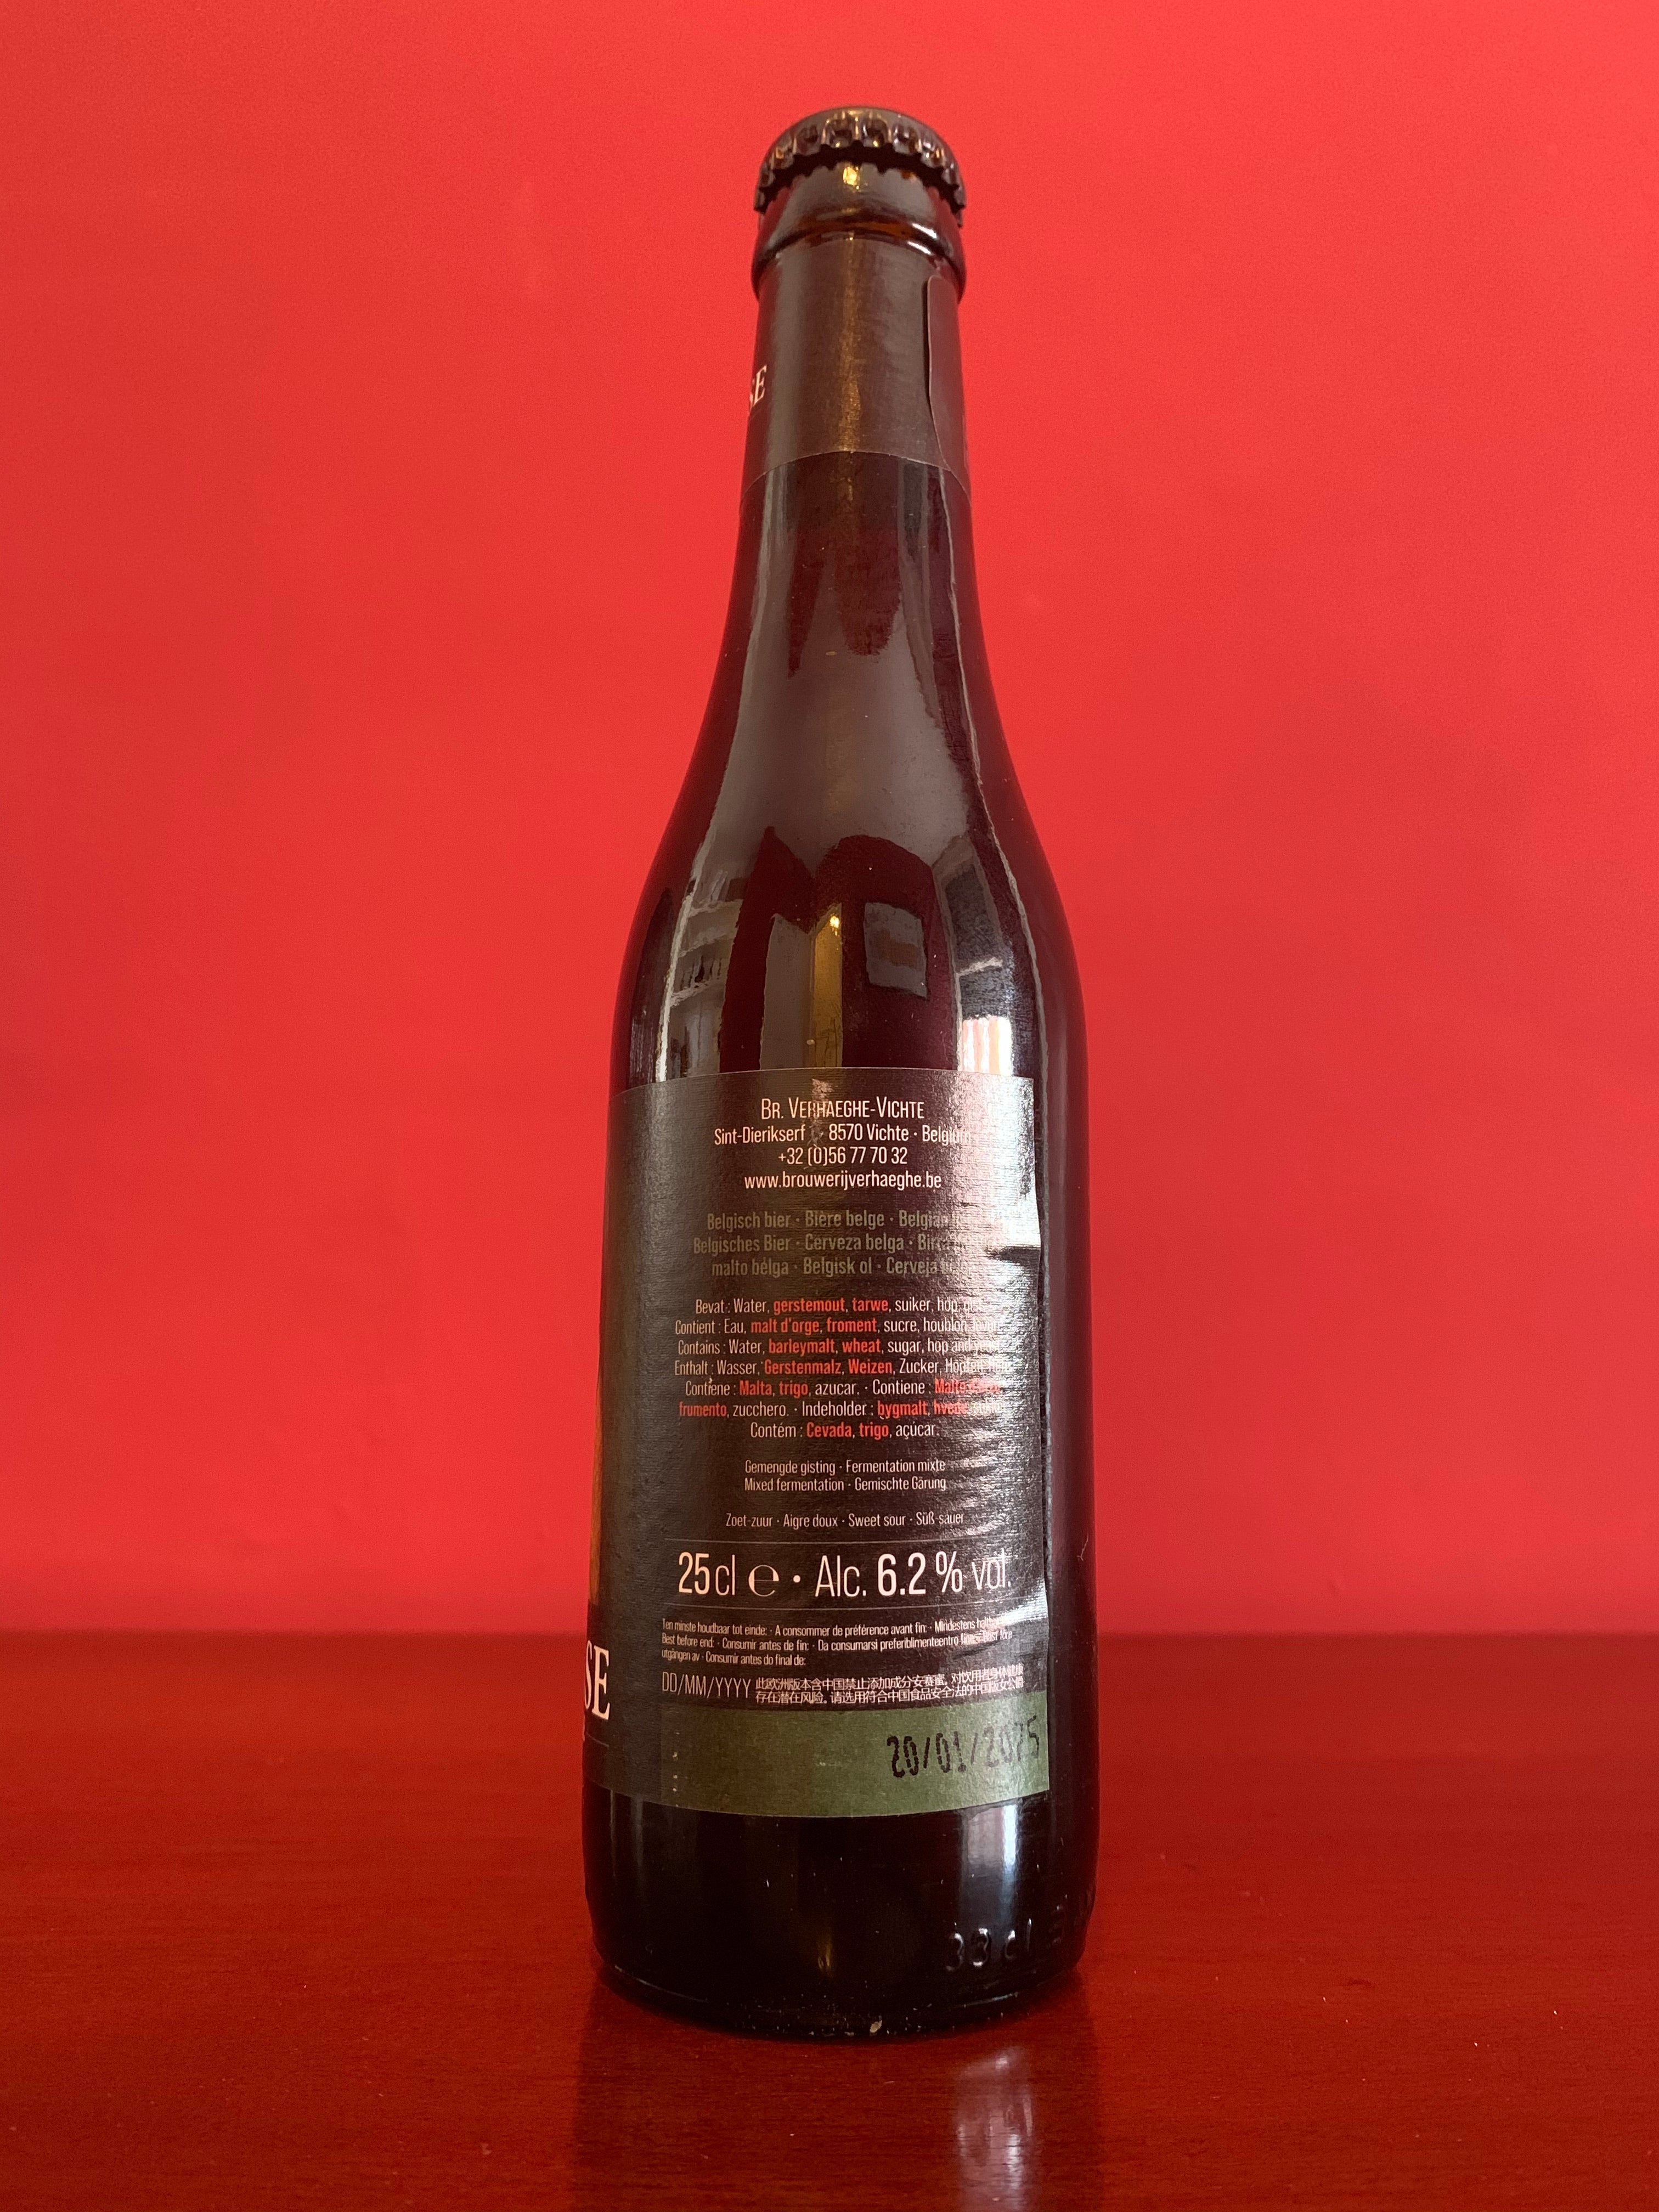 Duchesse de Bourgogne Red Flanders Ale 6.2%